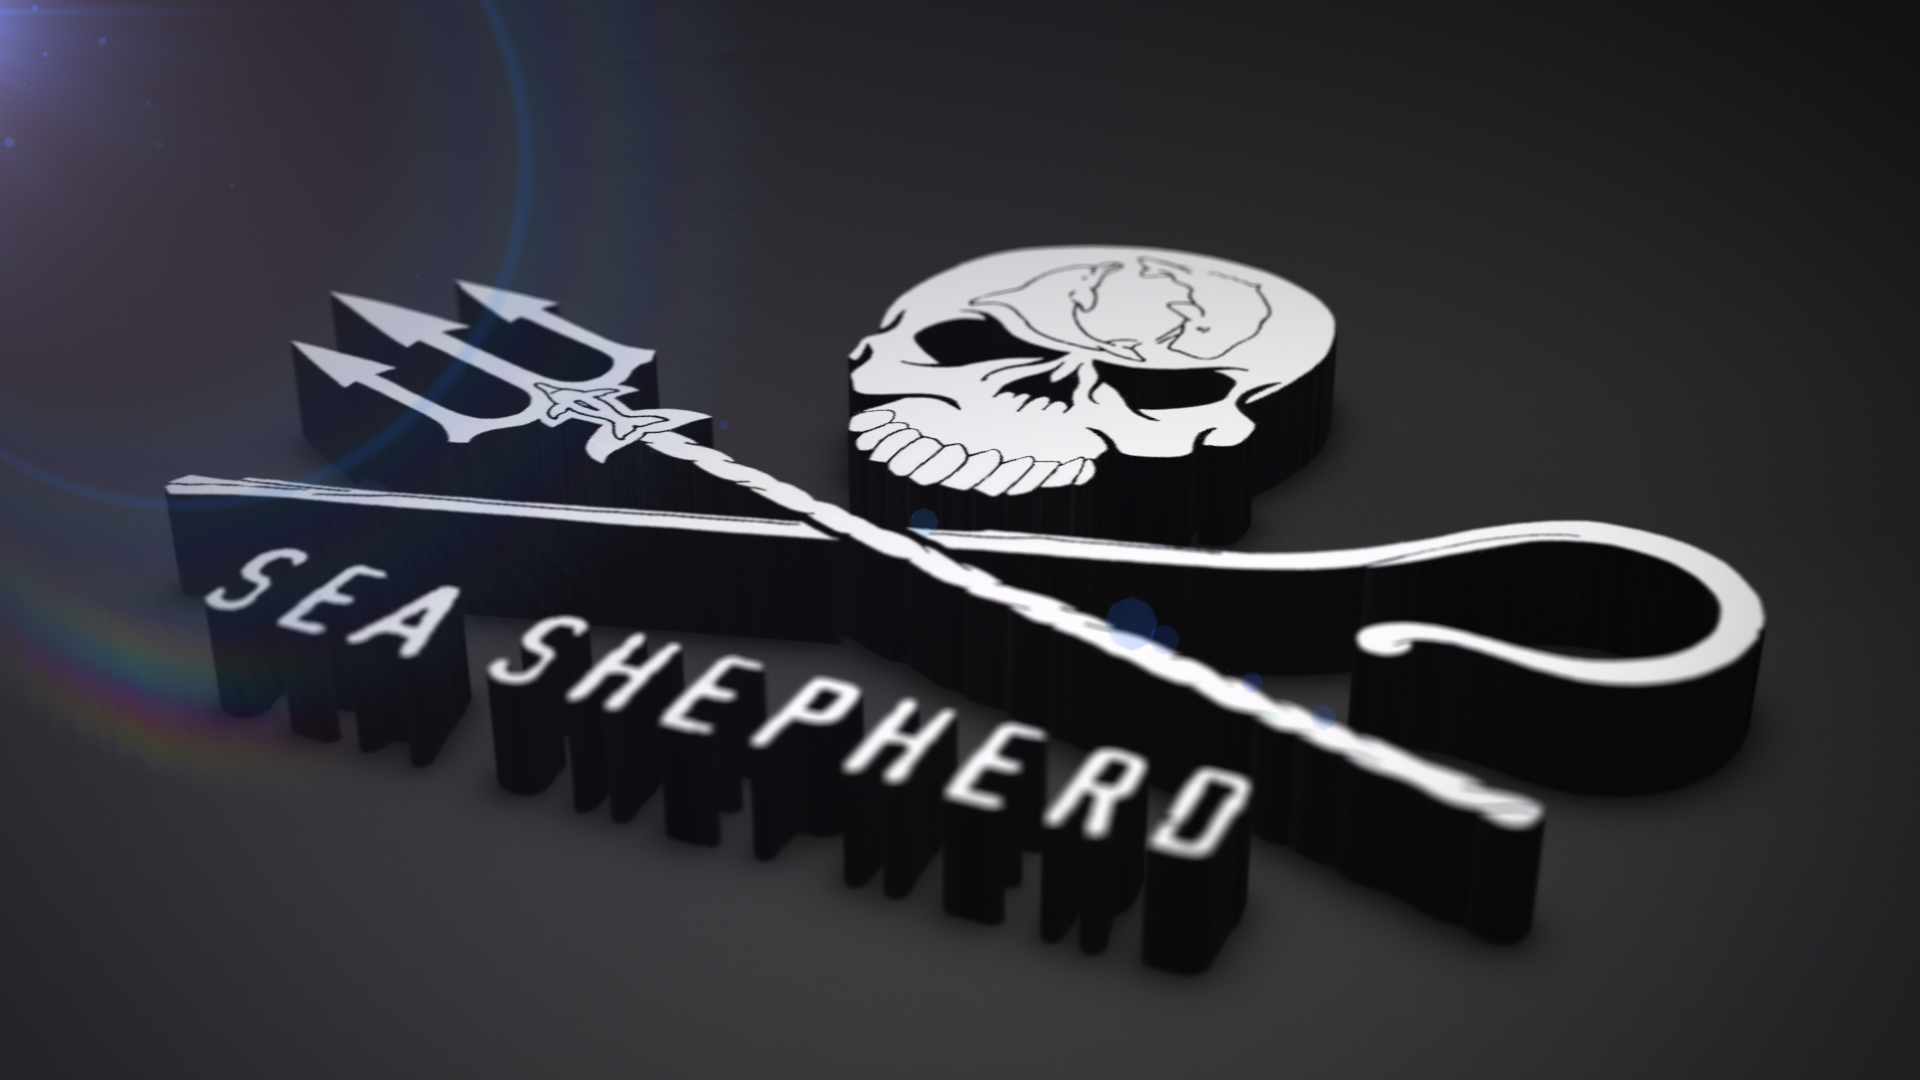 Man Made Sea Shepherd HD Wallpaper | Background Image